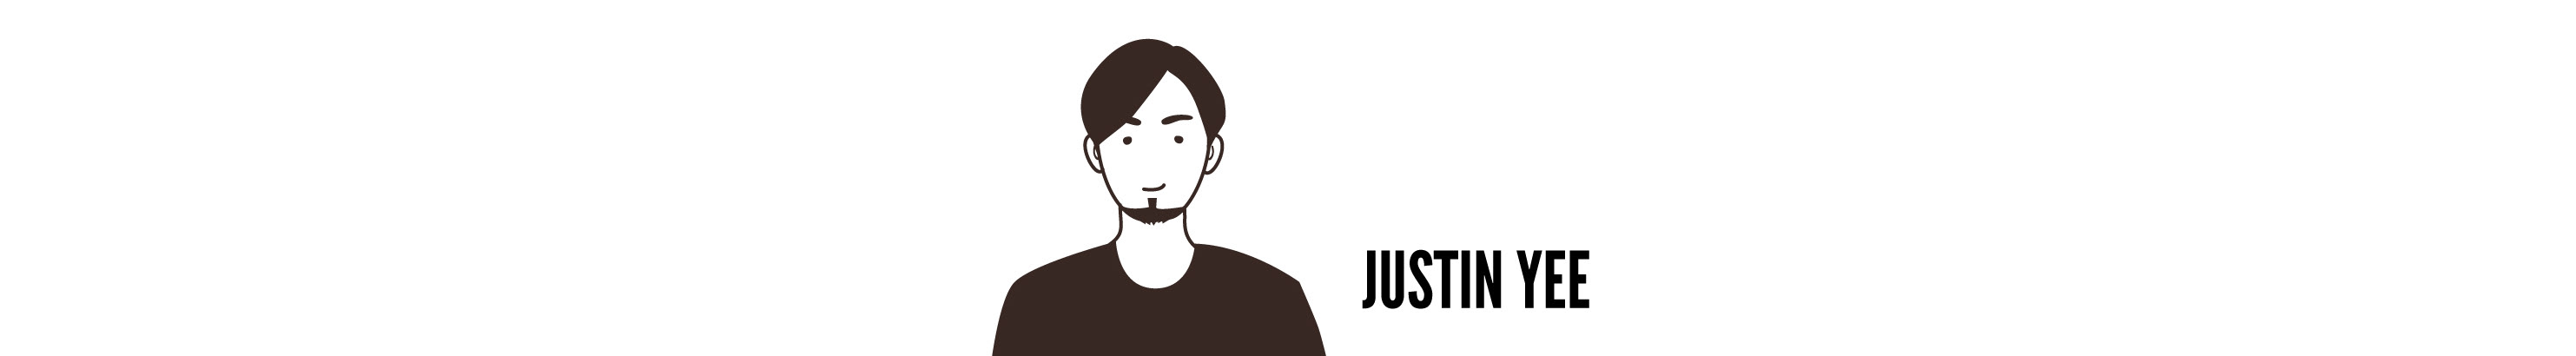 Justin Yee's profile banner